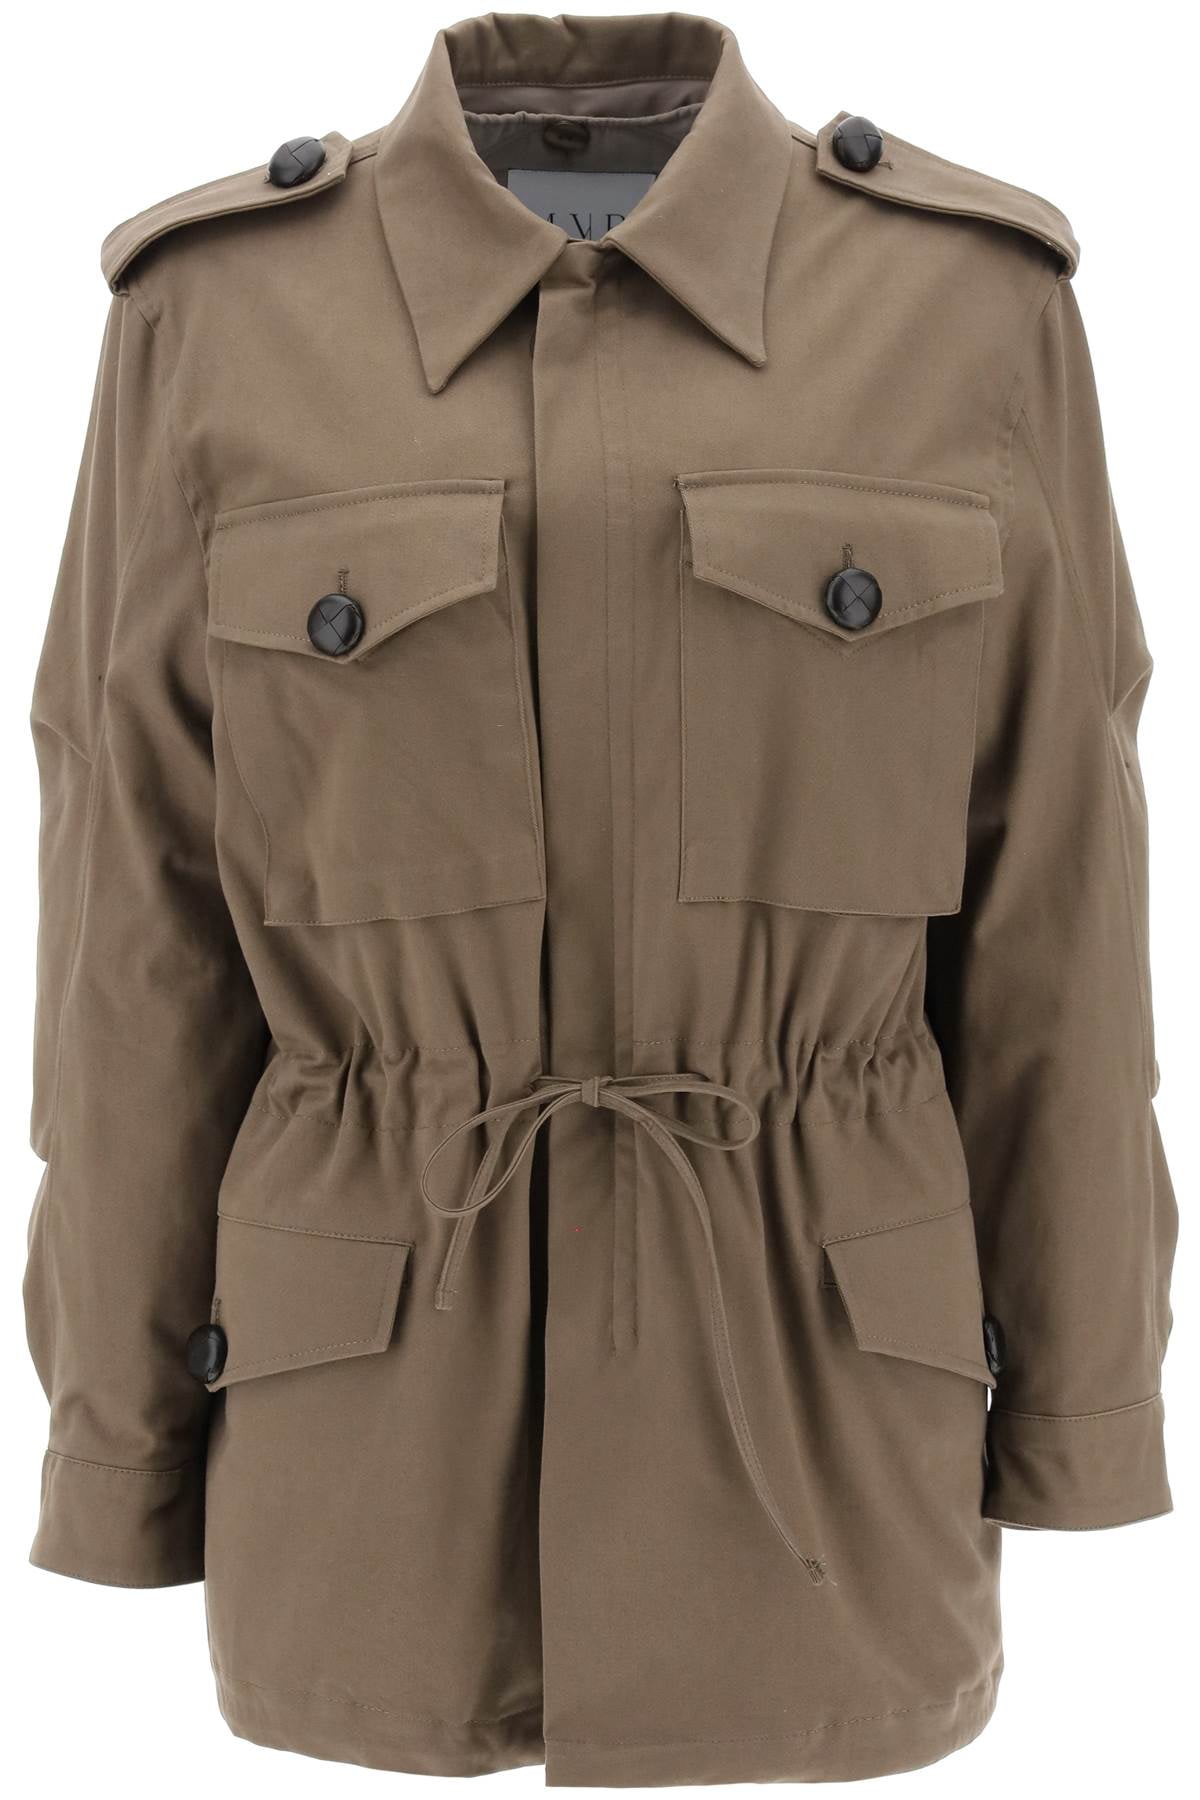 Mvp Wardrobe 'Bigli' Cotton Field Jacket Women - Walmart.com